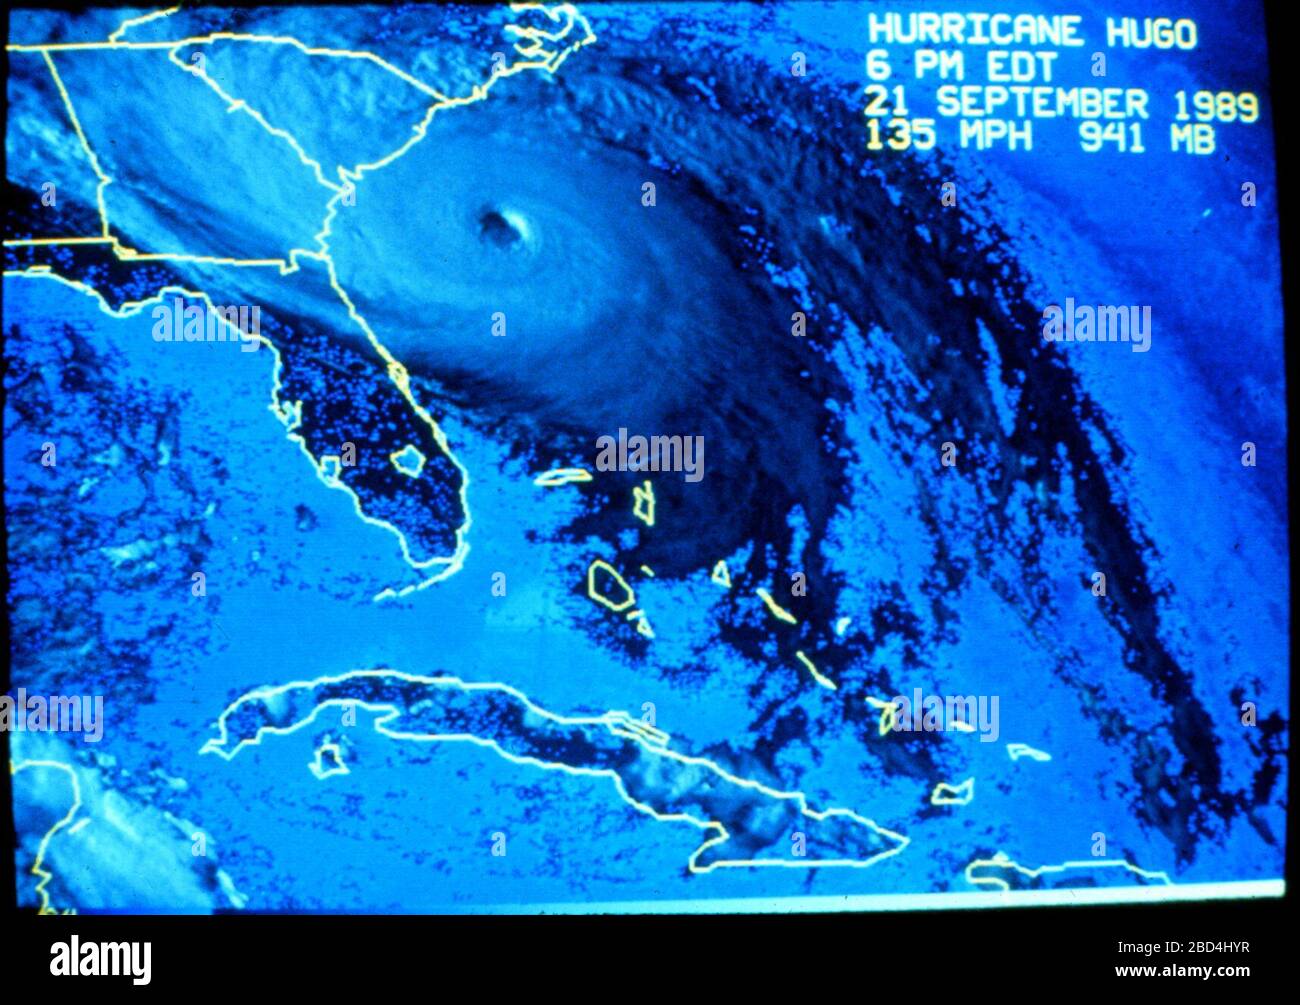 Sichtbares Spektren-Satellitenbild des Hurrikans Hugo am 21. September 1989 Stockfoto